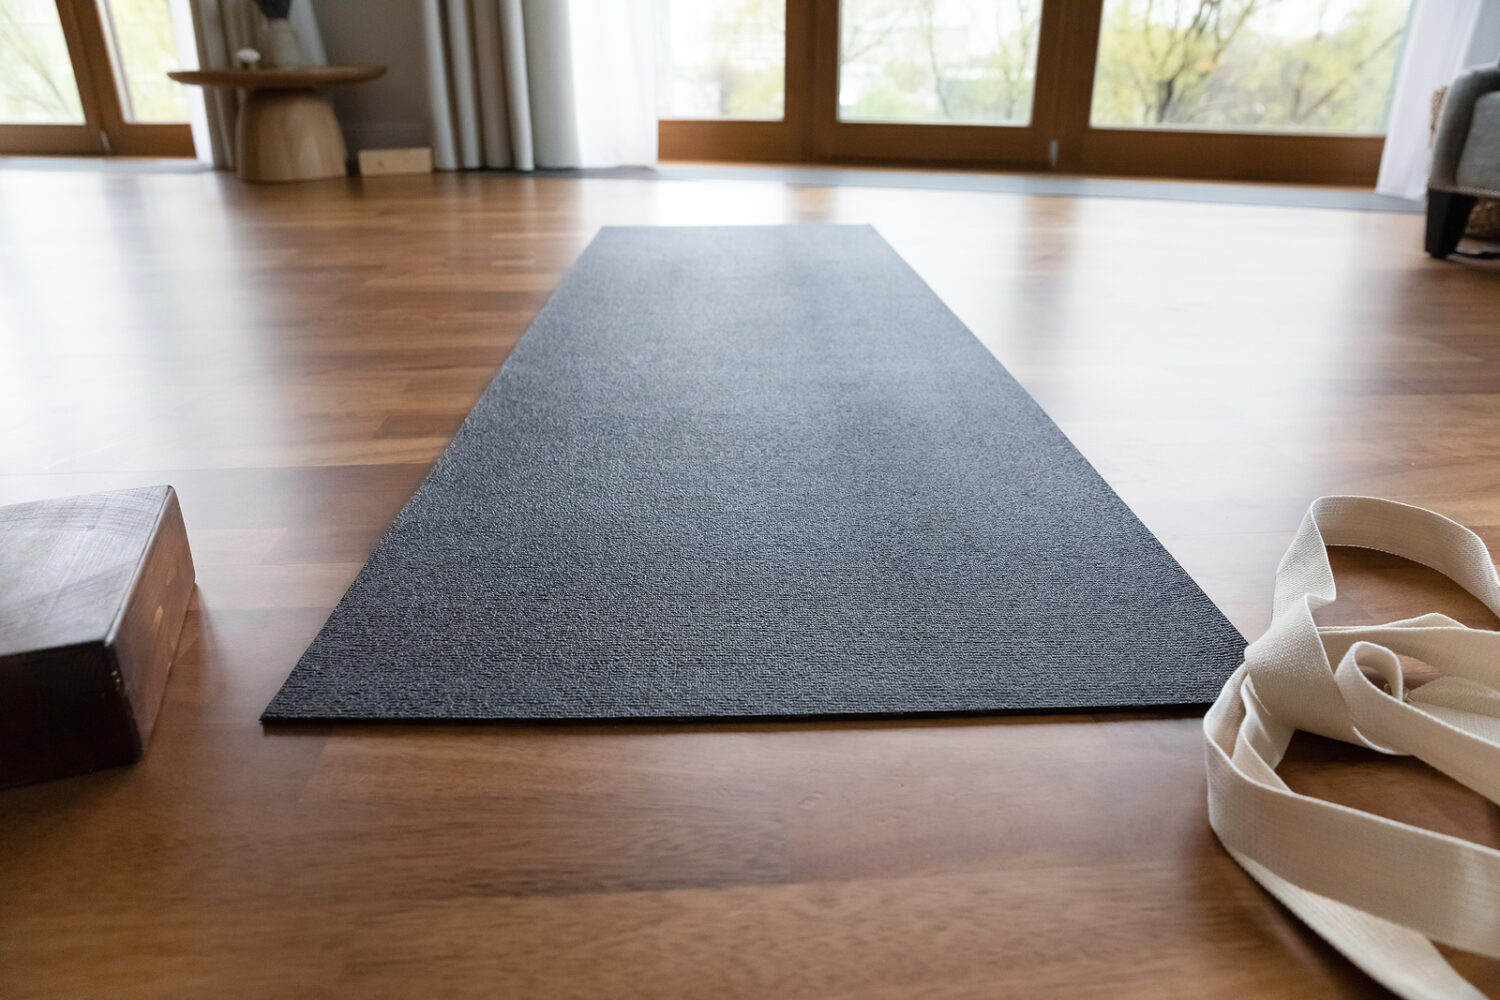 Dark grey yoga mat and strap in empty room